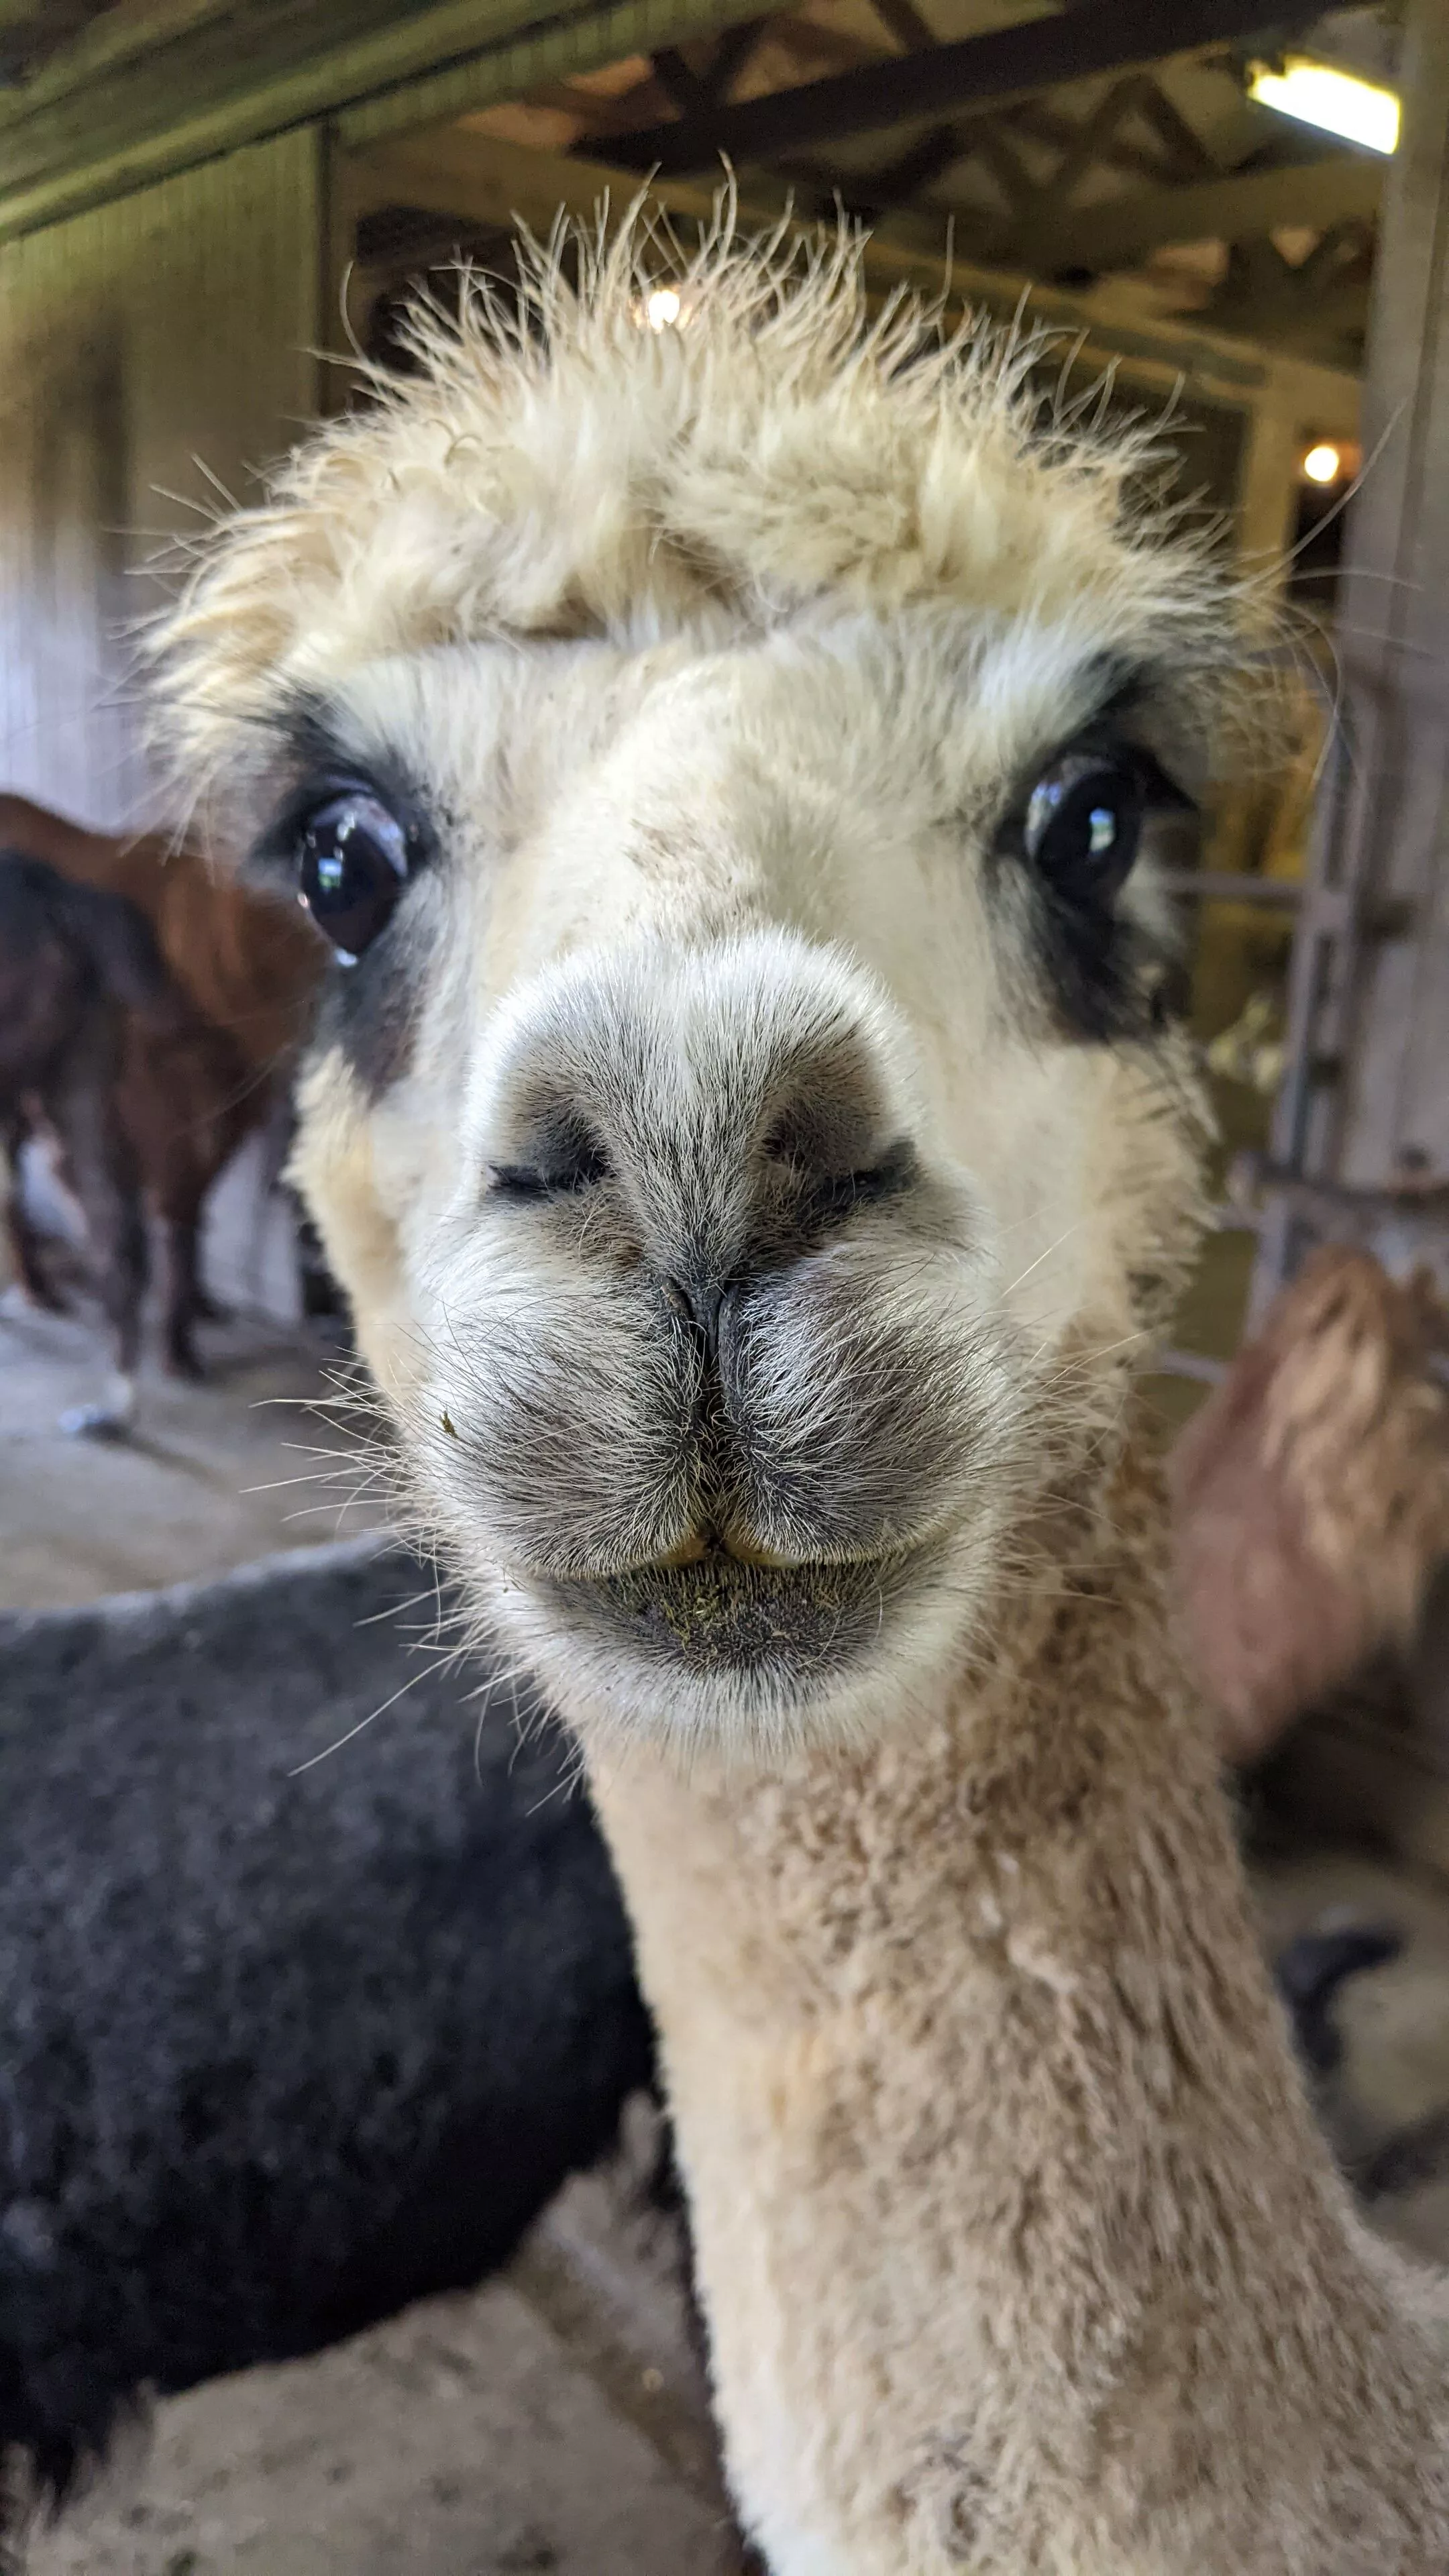 An image of an alpaca named Maeve